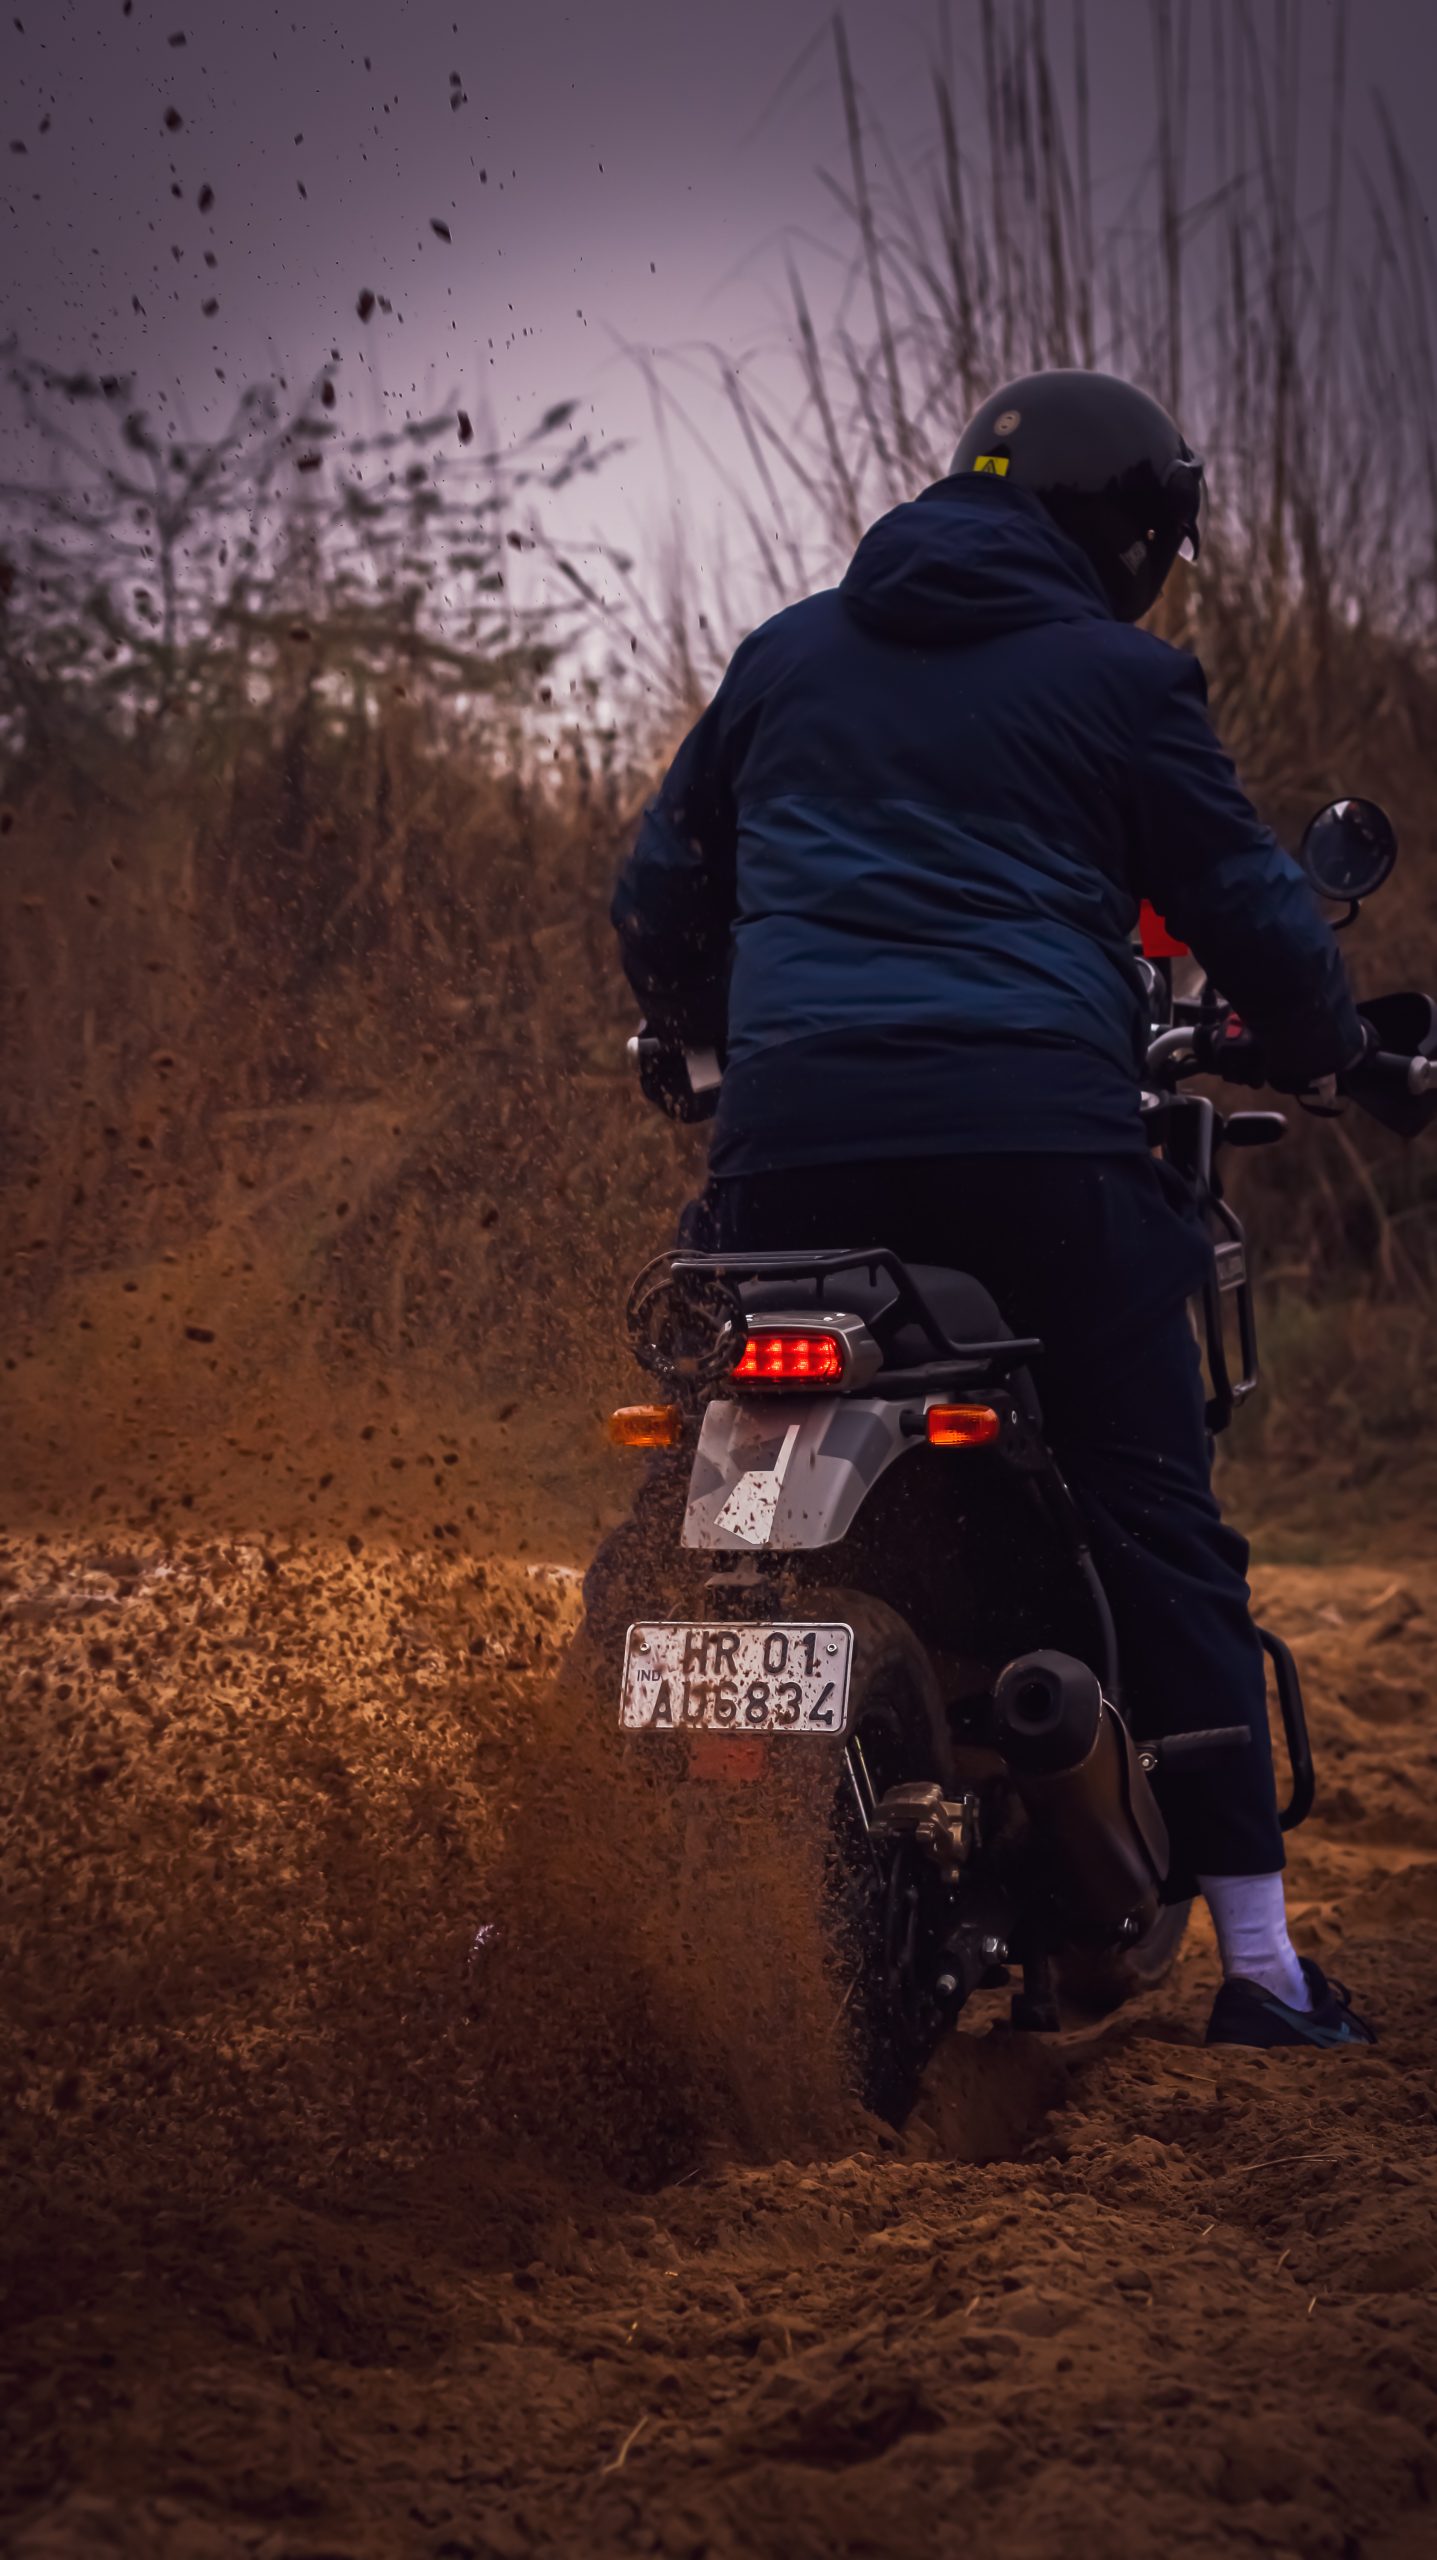 Rider riding bike in mud